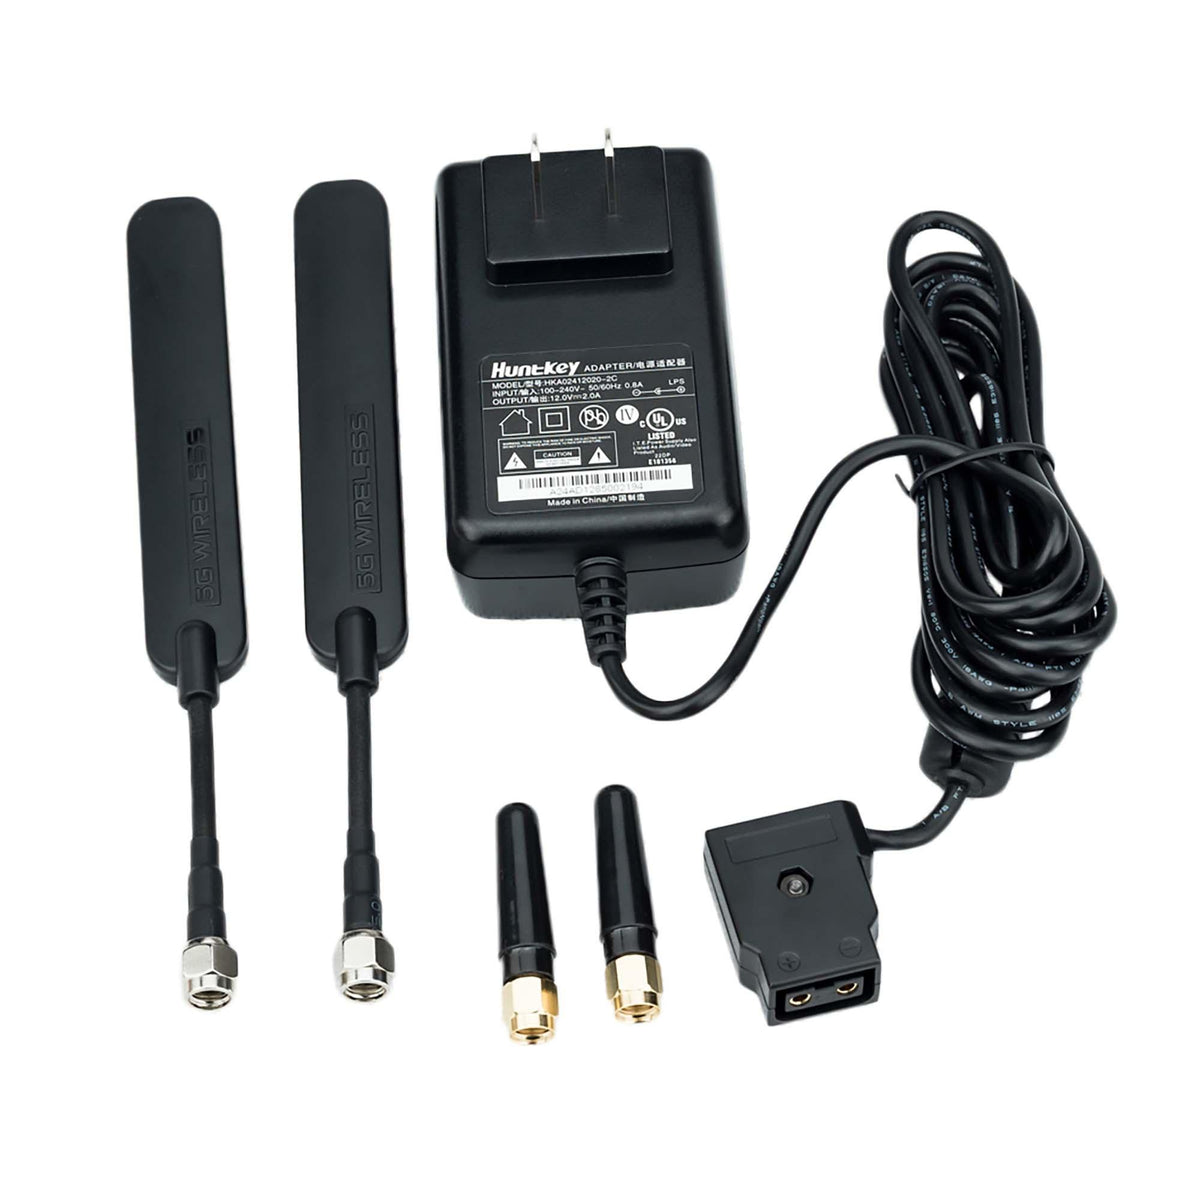 5G Wireless Video Power Accessory Kit